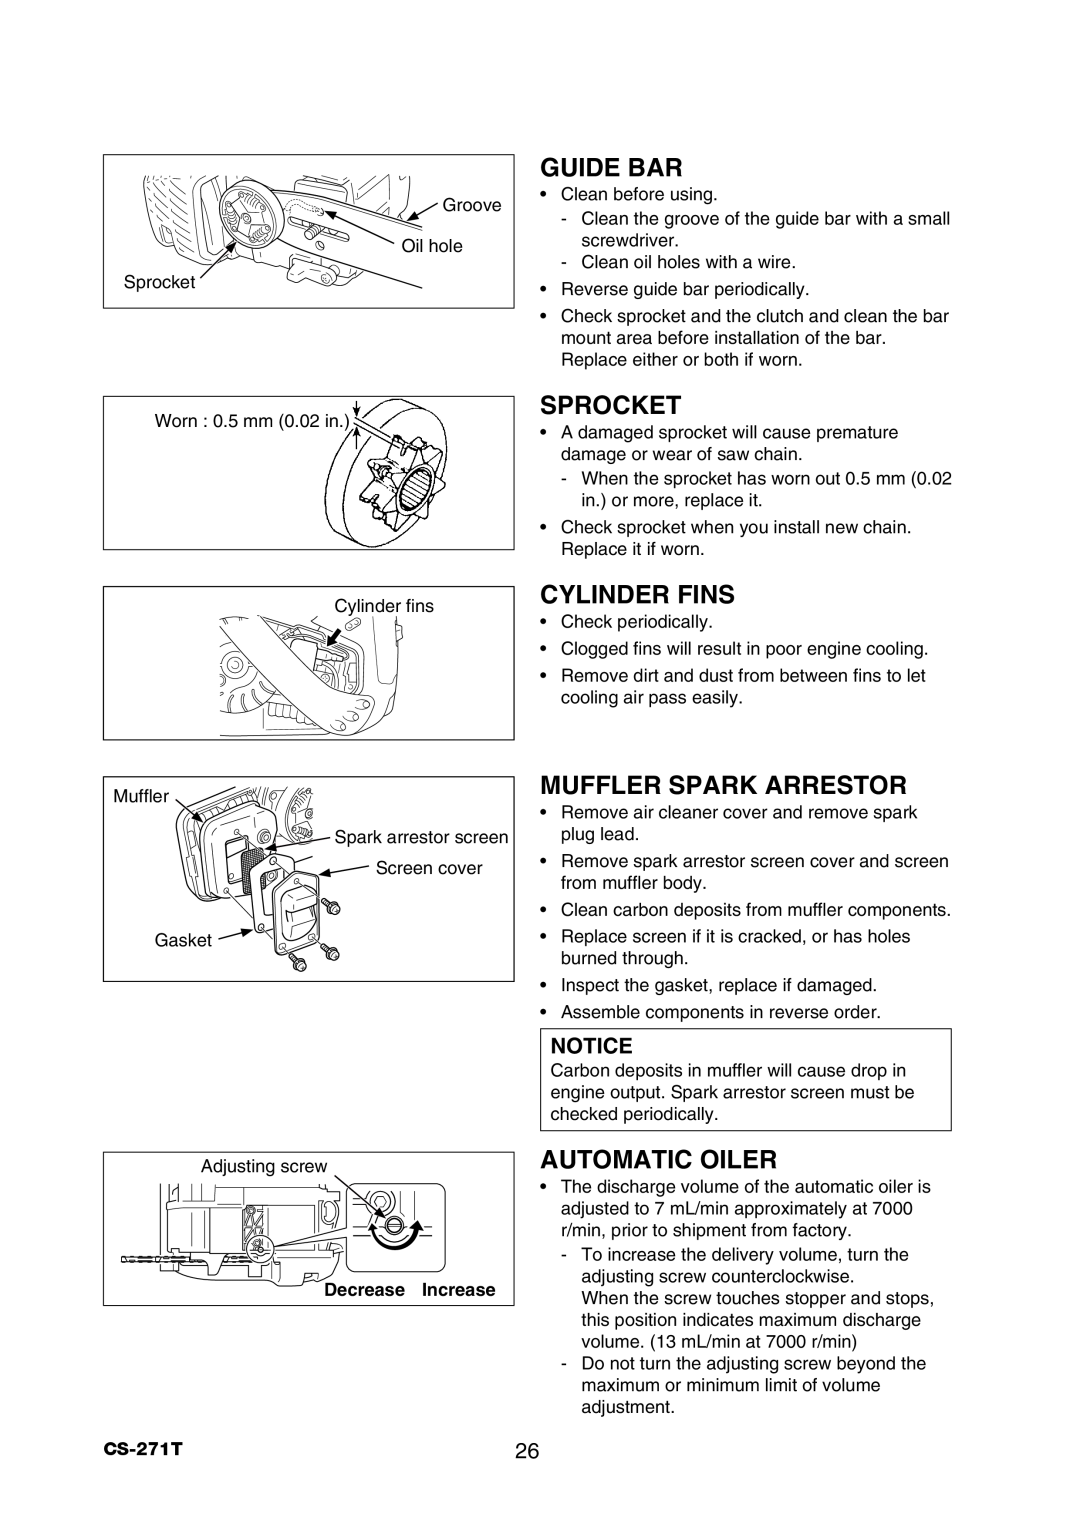 Echo CS-271T instruction manual Sprocket, Cylinder Fins, Muffler Spark Arrestor, Automatic Oiler, Guide Bar 